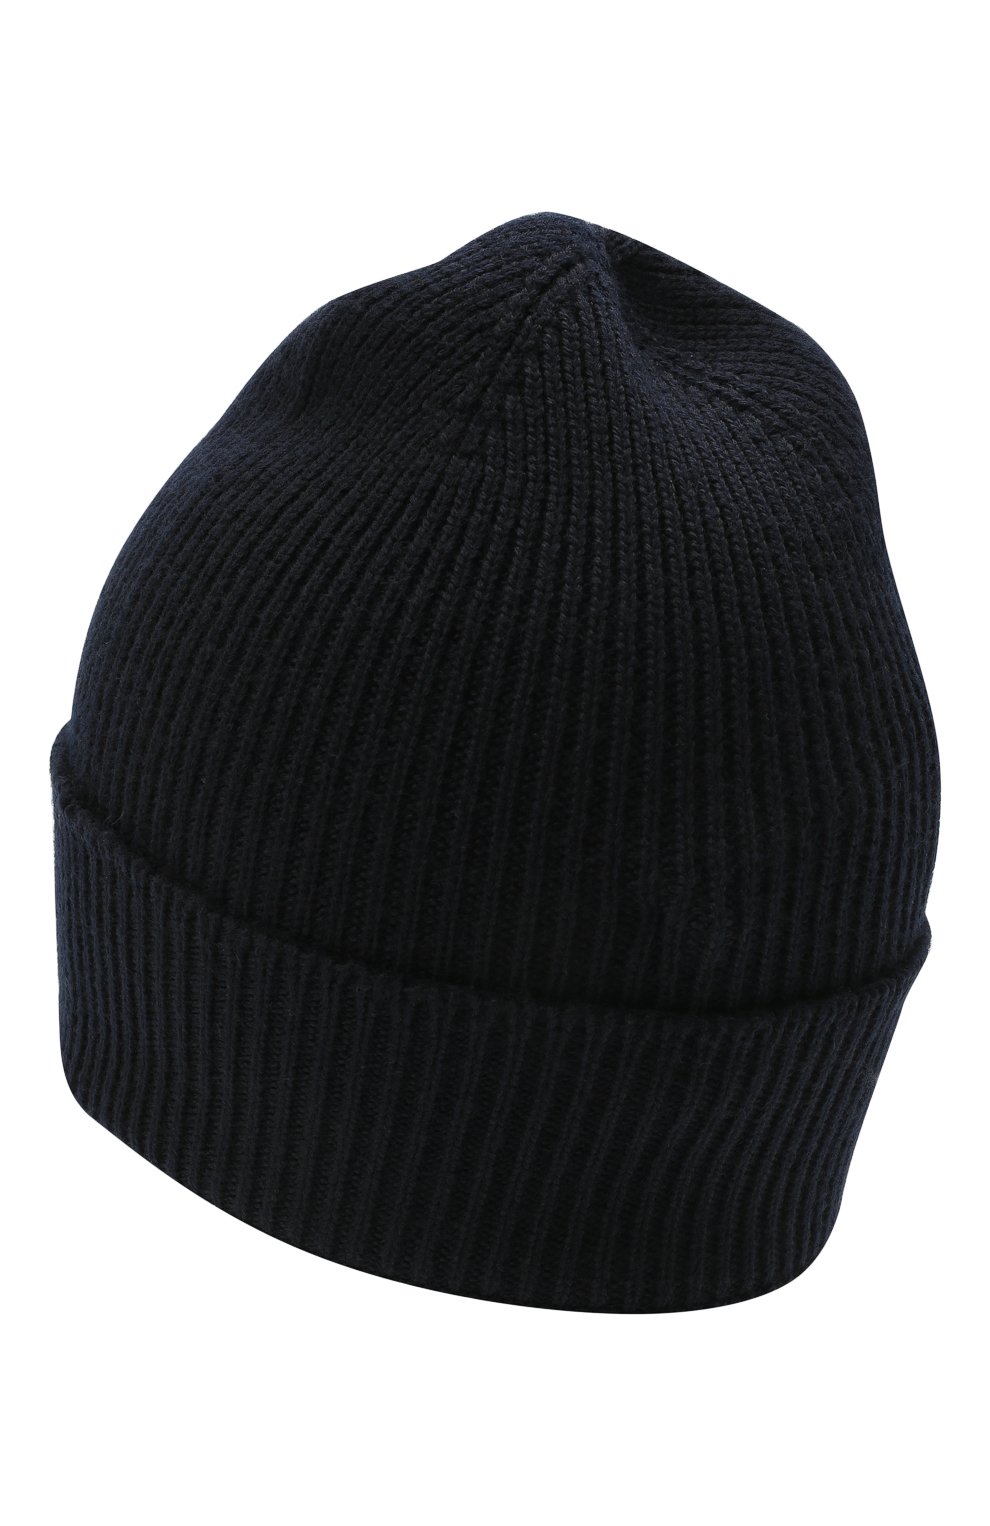 Мужская шерстяная шапка MONCLER темно-синего цвета, арт. G2-091-3B705-00-A9342 | Фото 2 (Материал: Текстиль, Ше рсть; Кросс-КТ: Трикотаж)